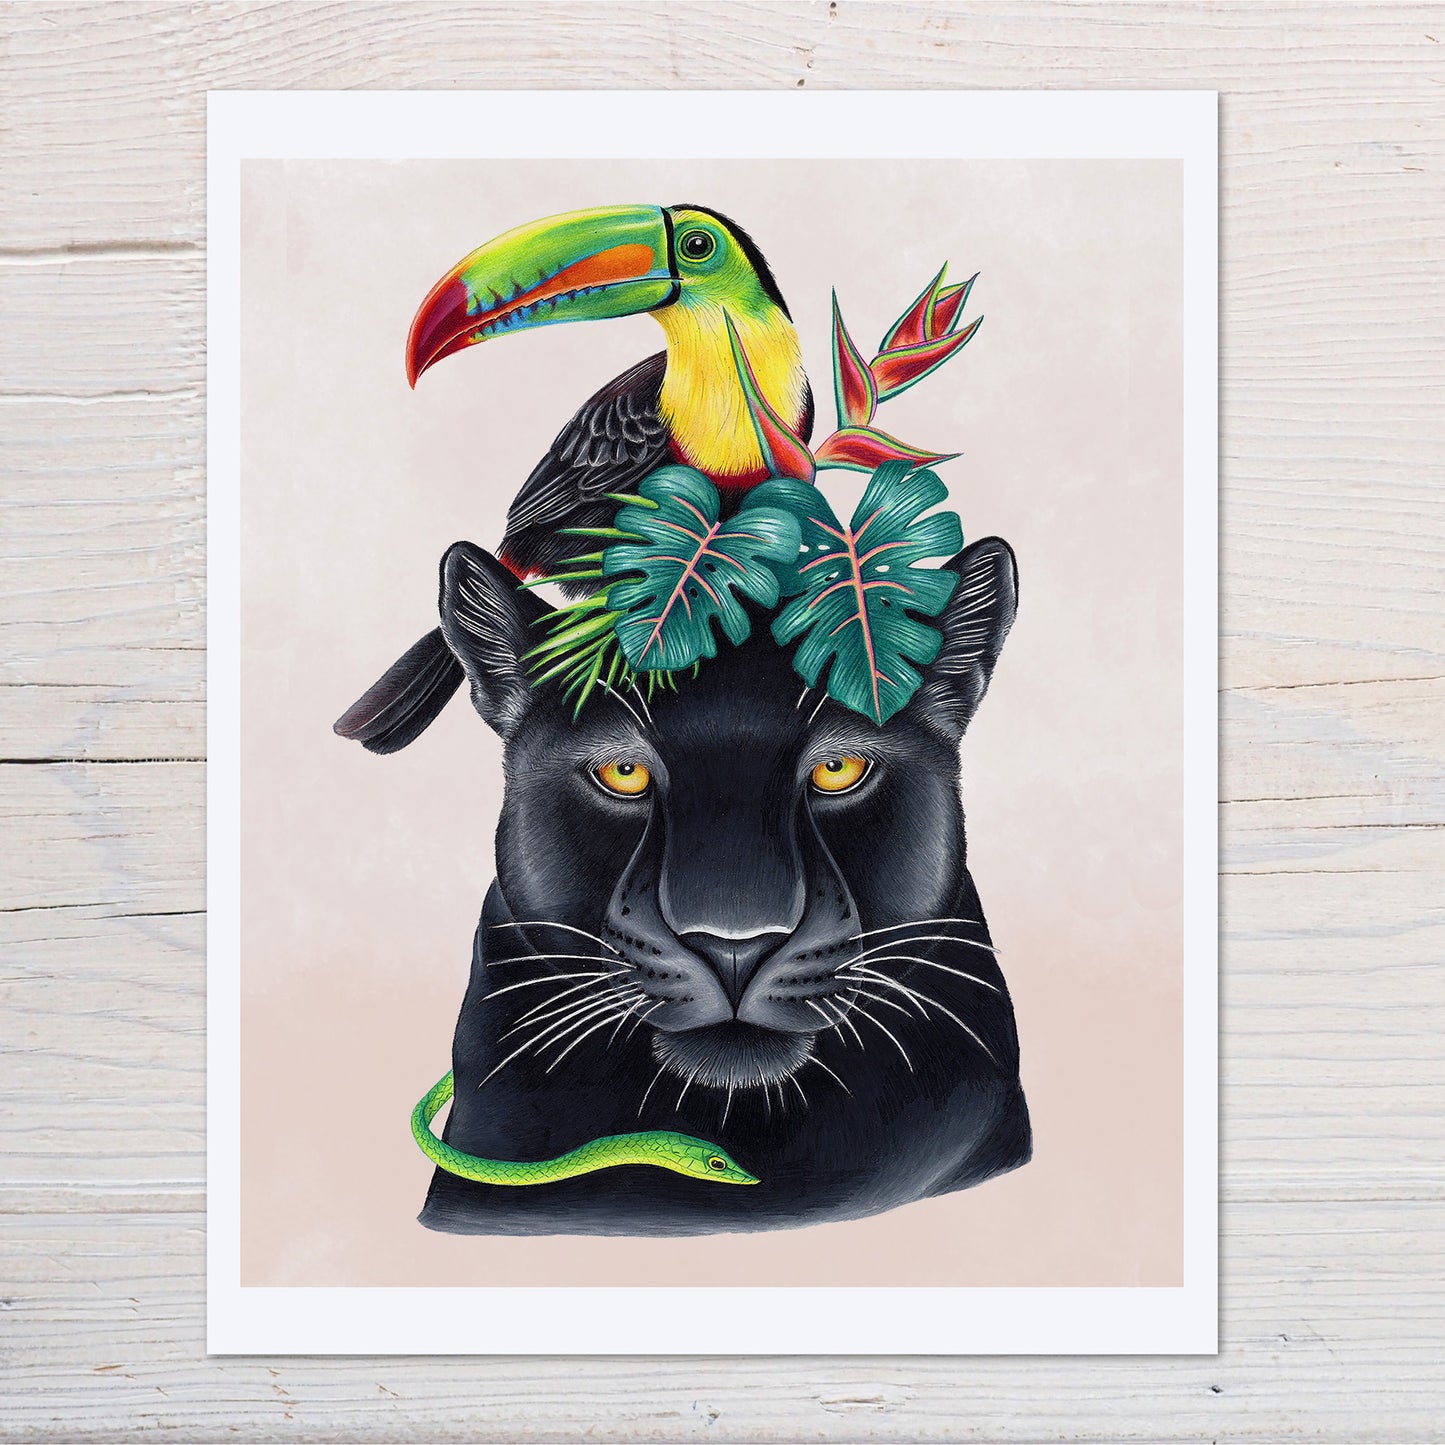 Hand drawn pencil art of black jaguar with toucan and tropical plants by Rachel Diaz-Bastin. Prints available.